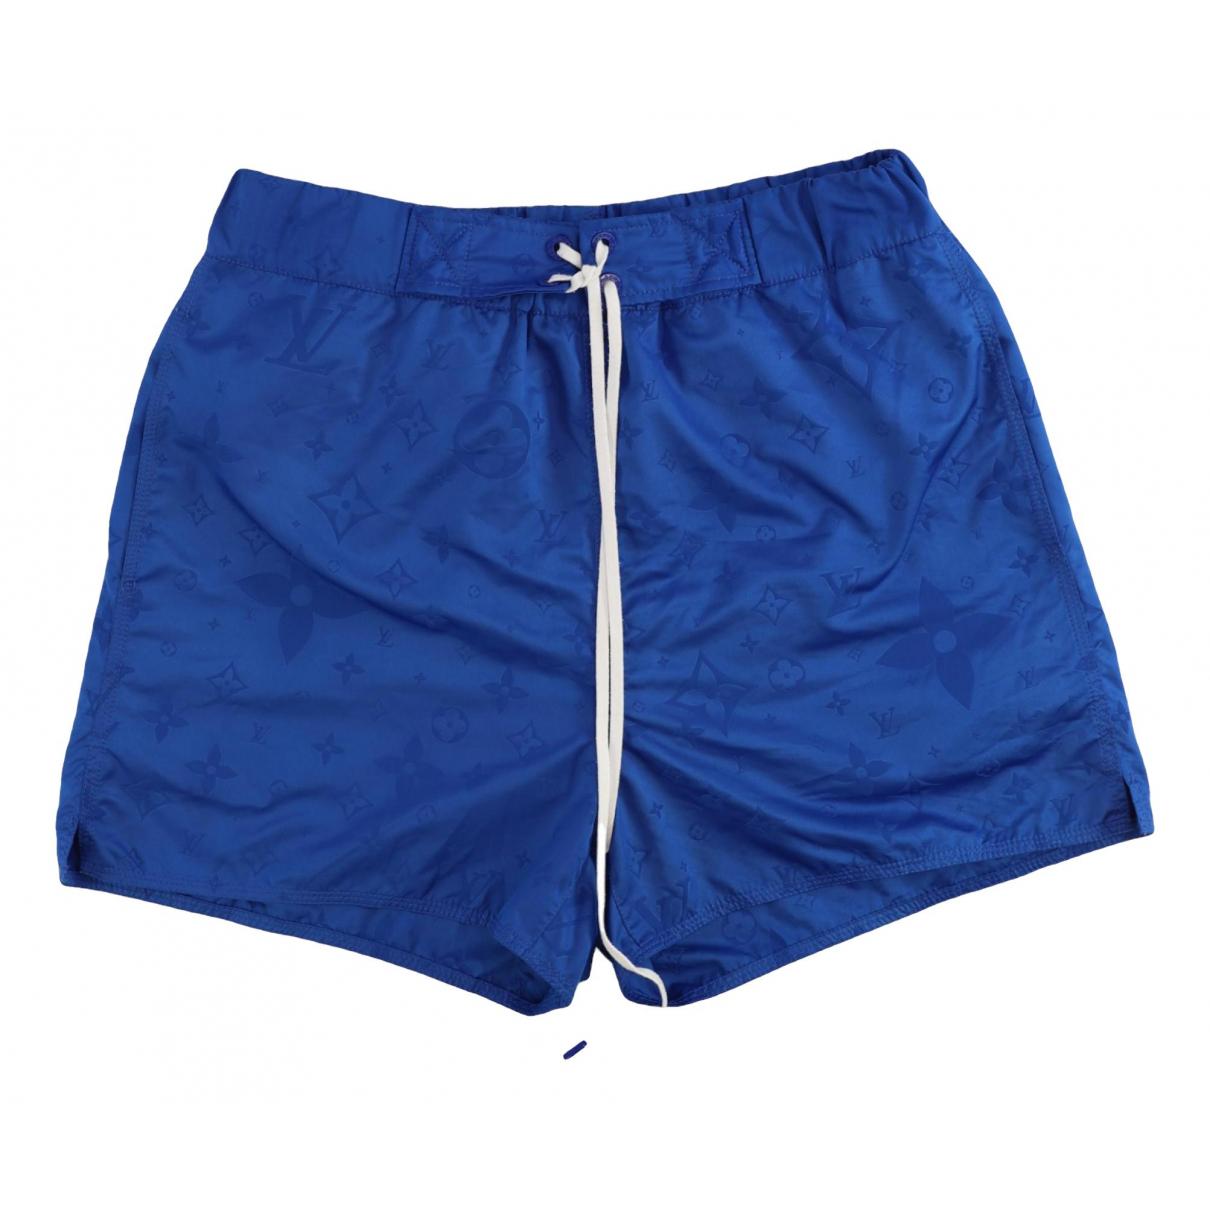 Louis #Vuitton swim shorts